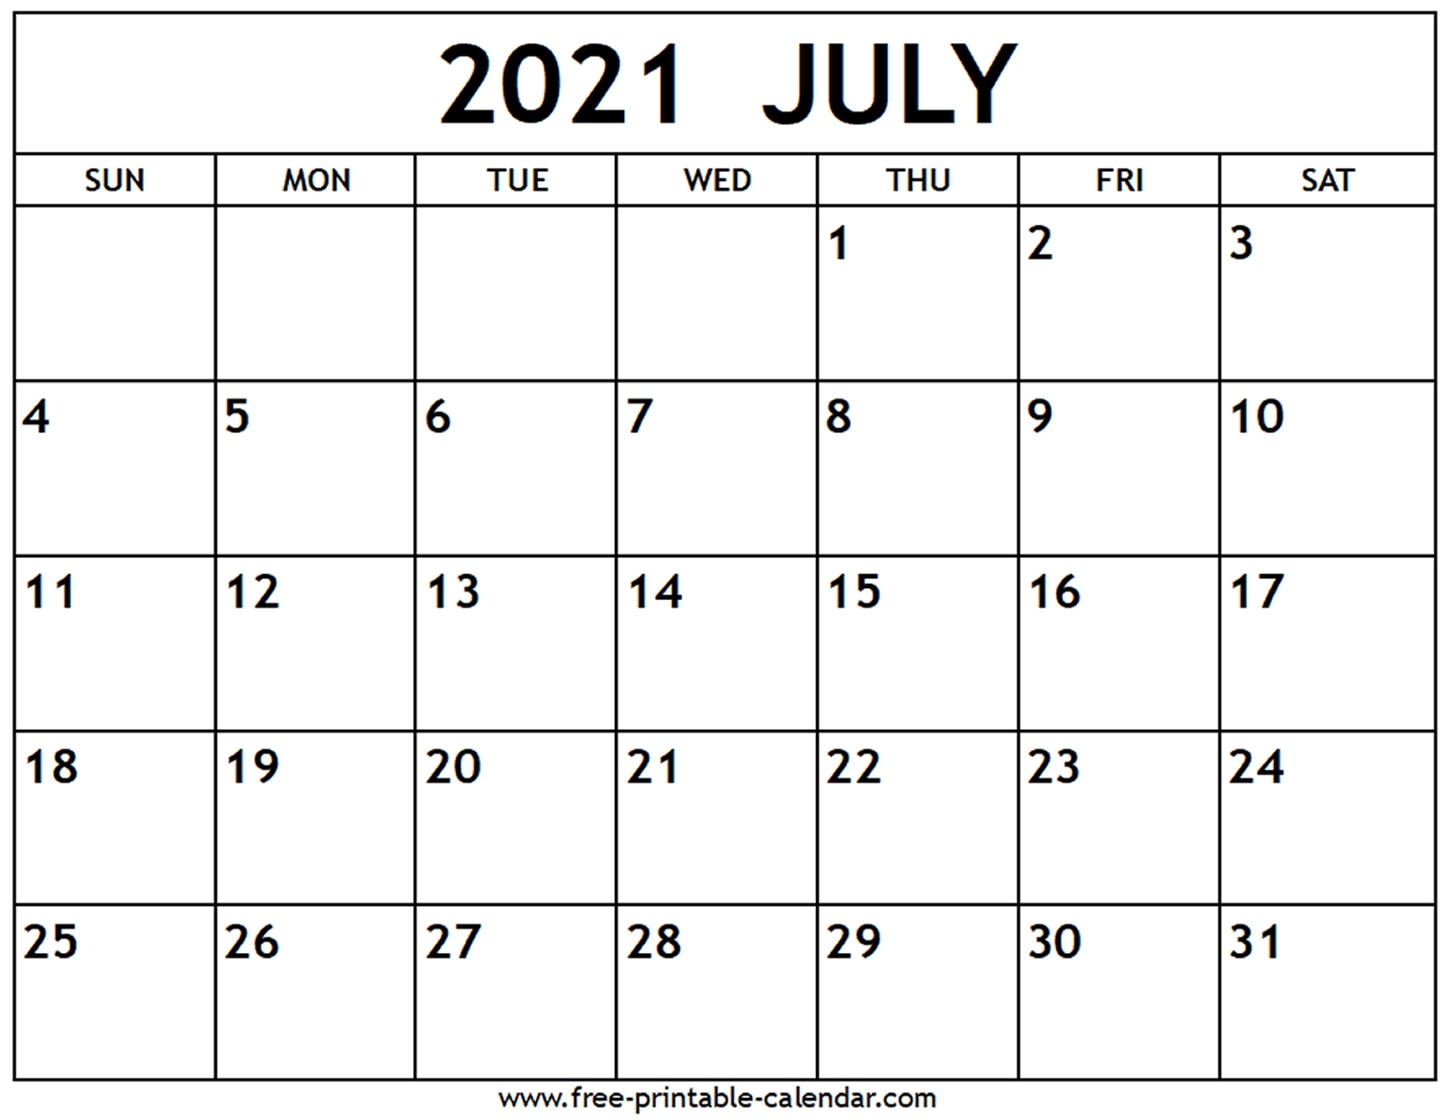 Free Printable Calendar July 2021 June 2021 | Free 2021 Printable Calendars July 2021 Calendar Download